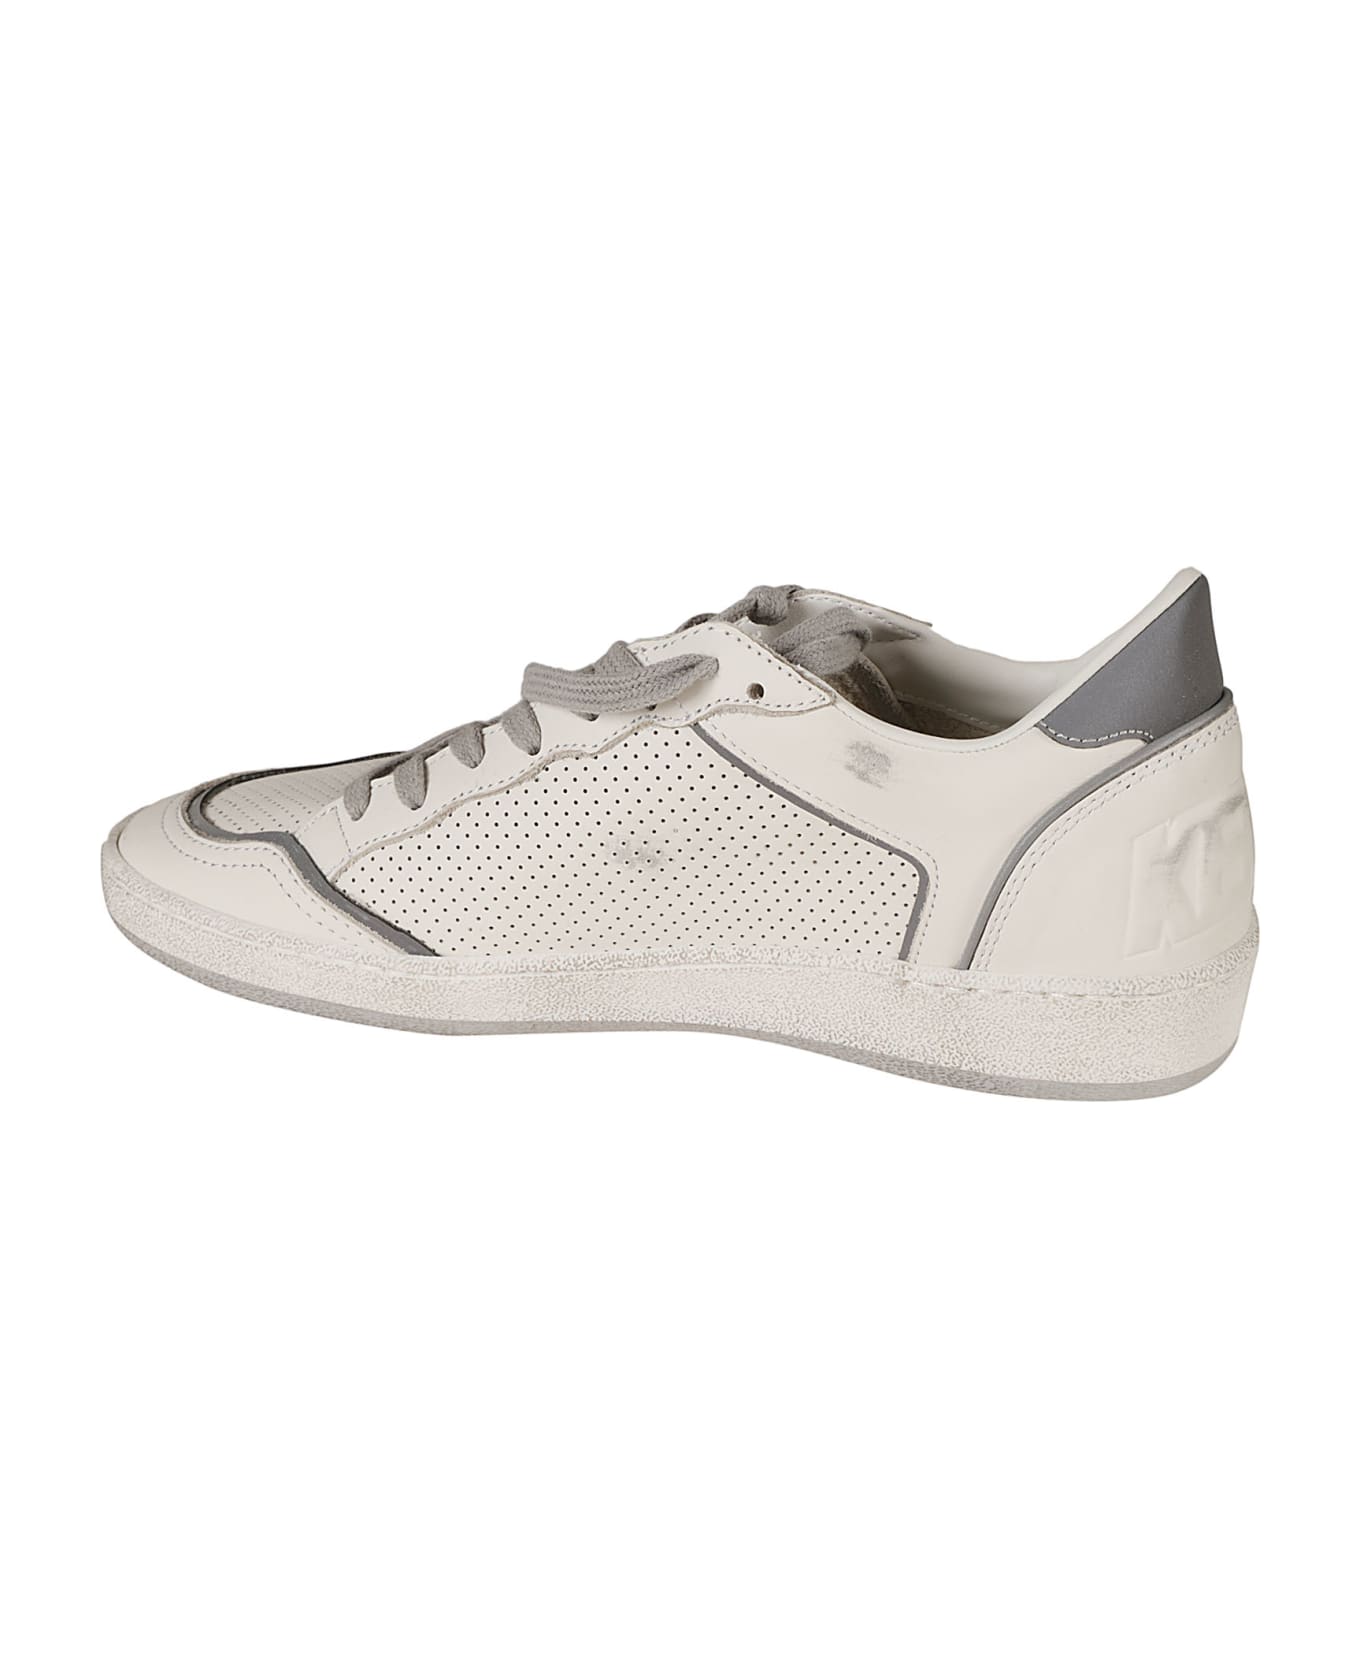 Golden Goose Ball Star Sneakers - White/Silver